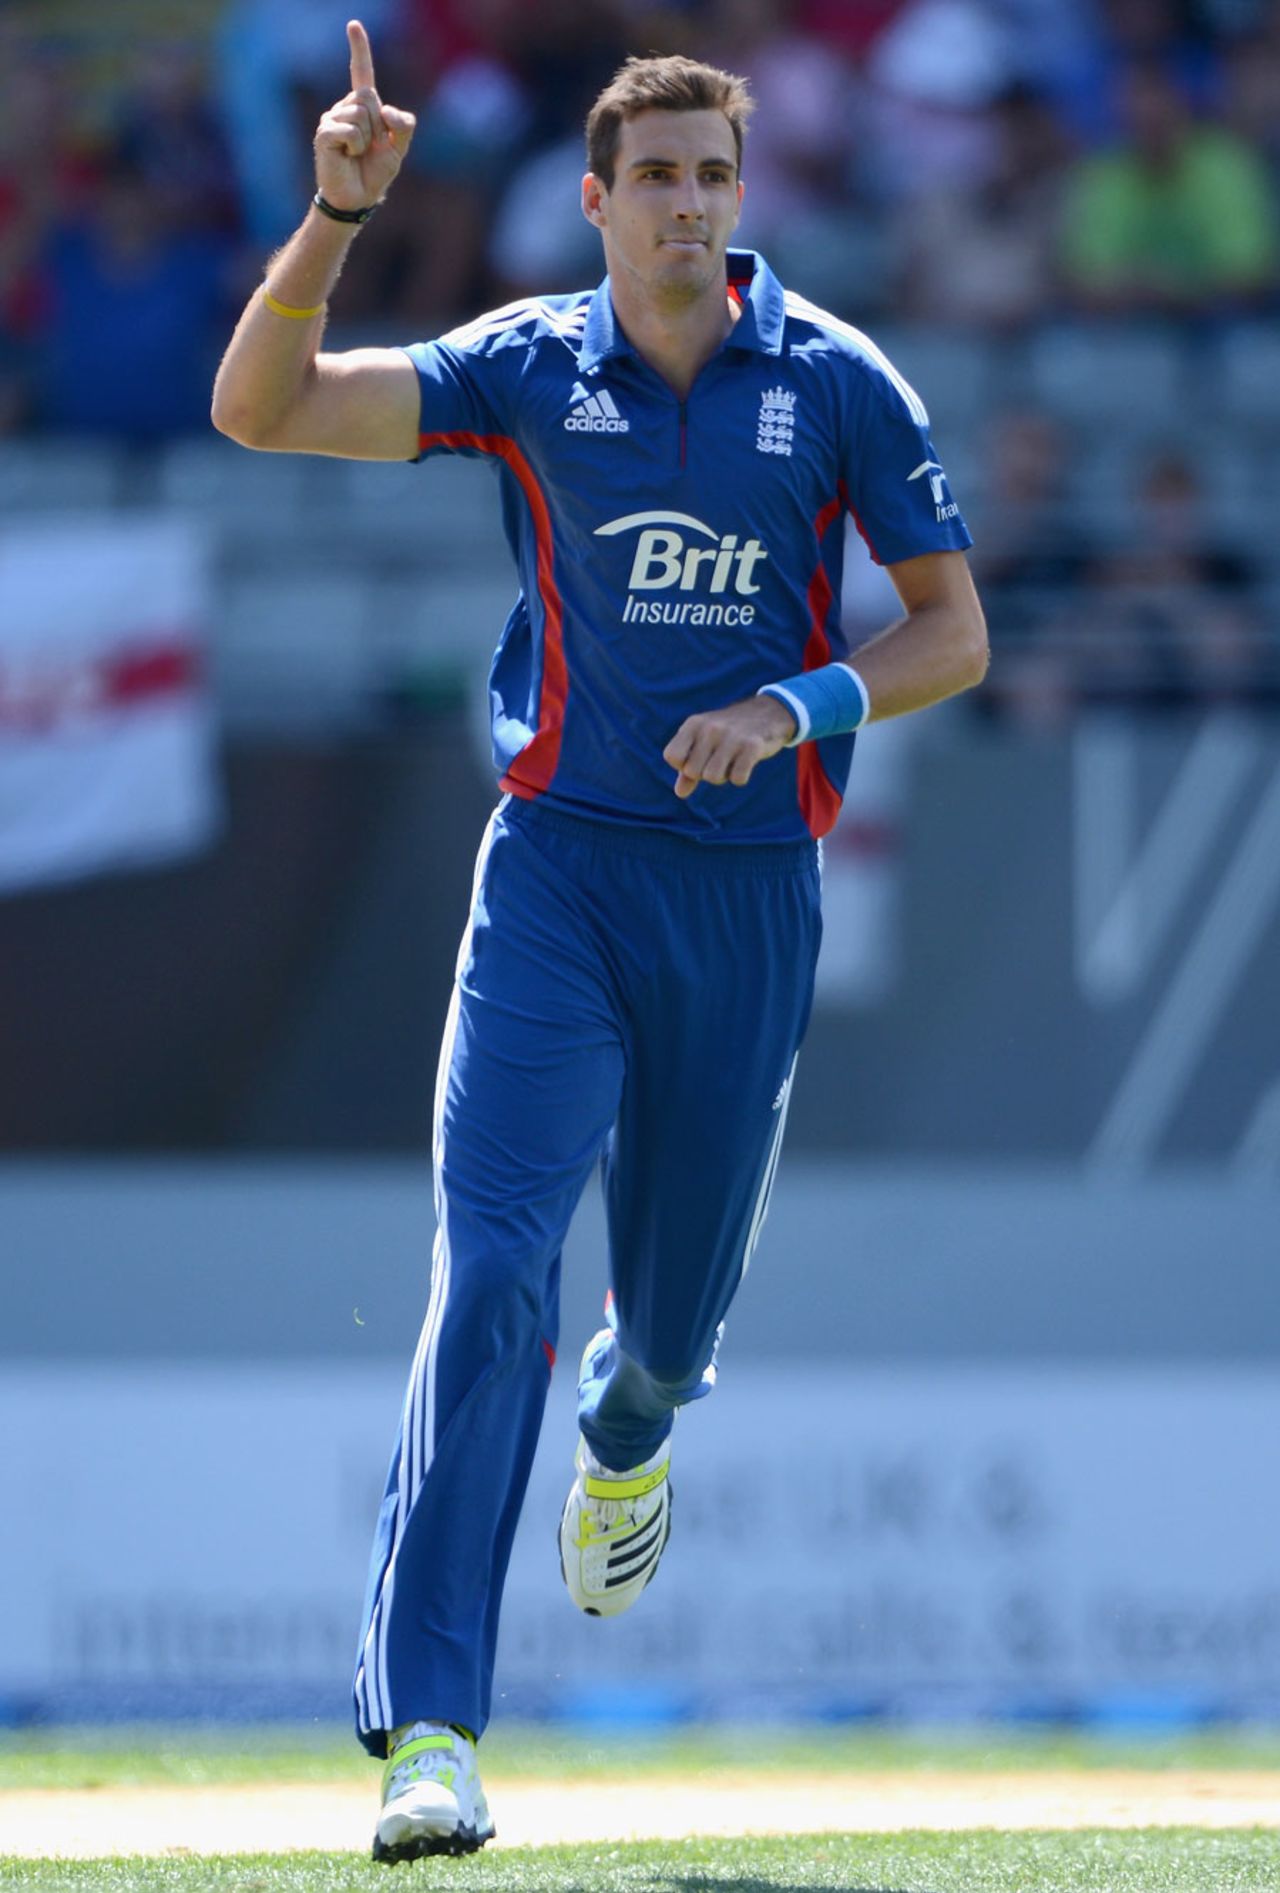 Steven Finn was unplayable in his opening spell, New Zealand v England, 3rd ODI, Auckland, February 23, 2013